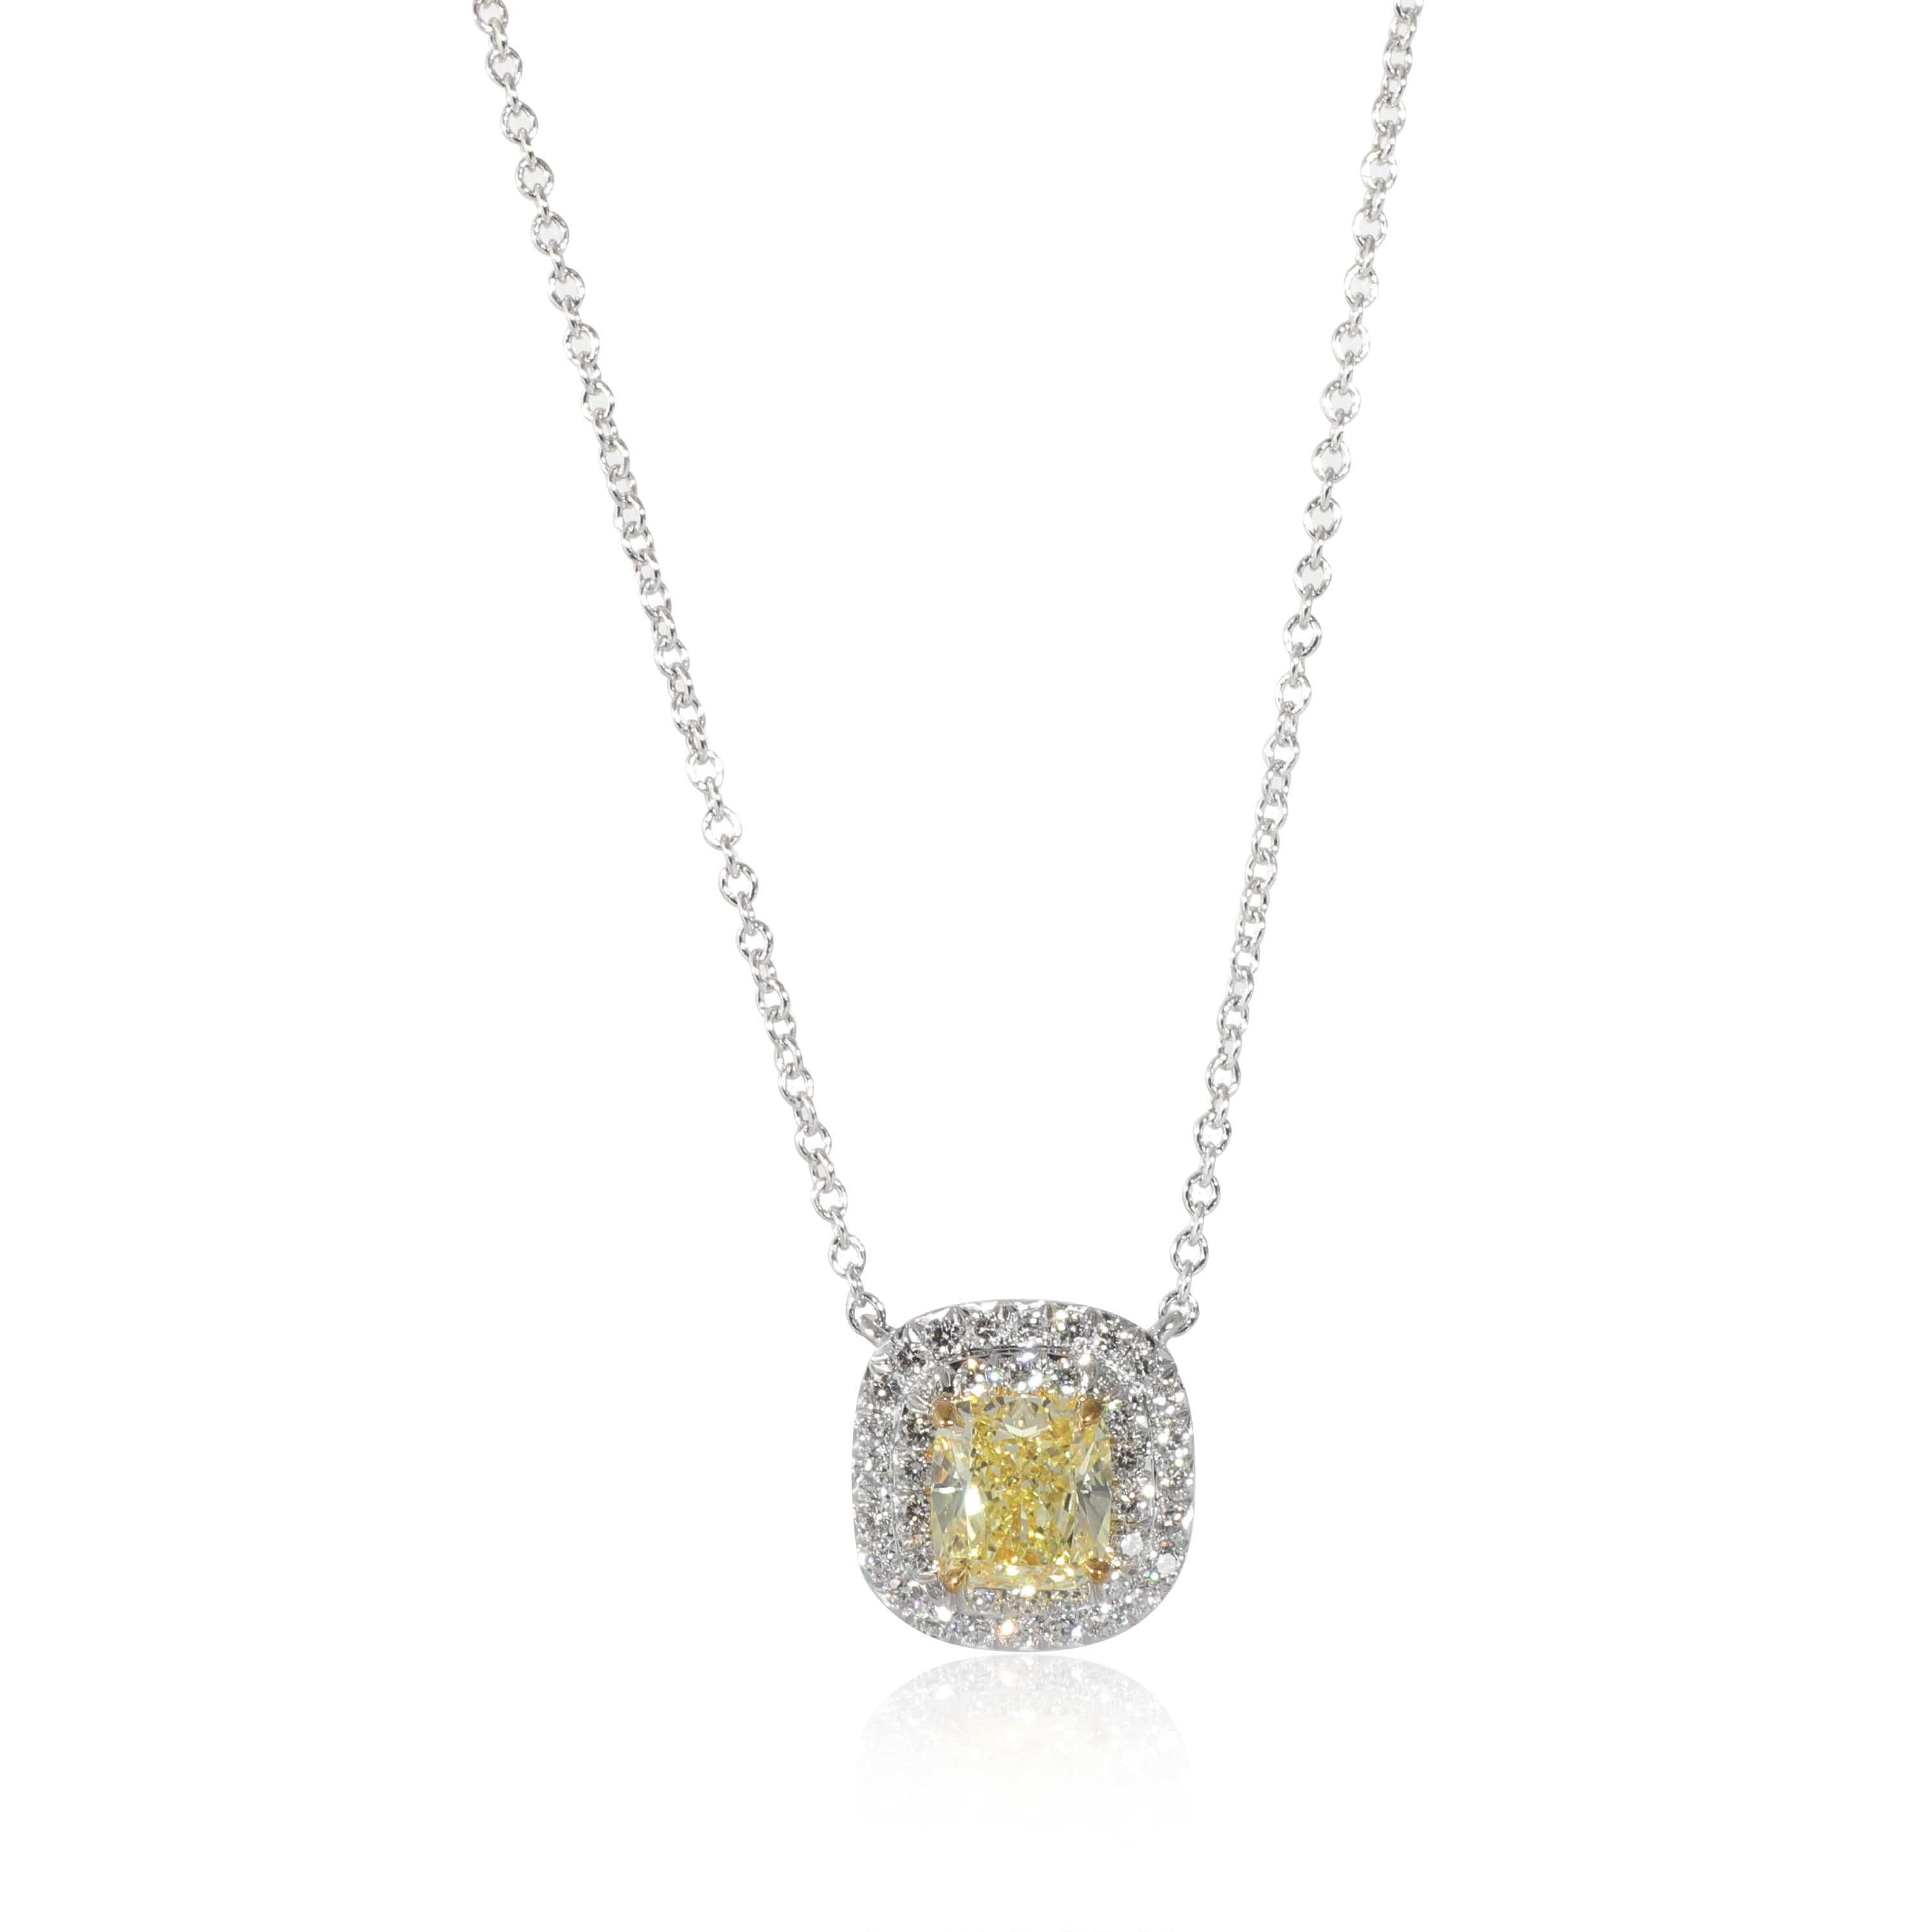 Tiffany Lock Pendant in White Gold with Pavé Diamonds